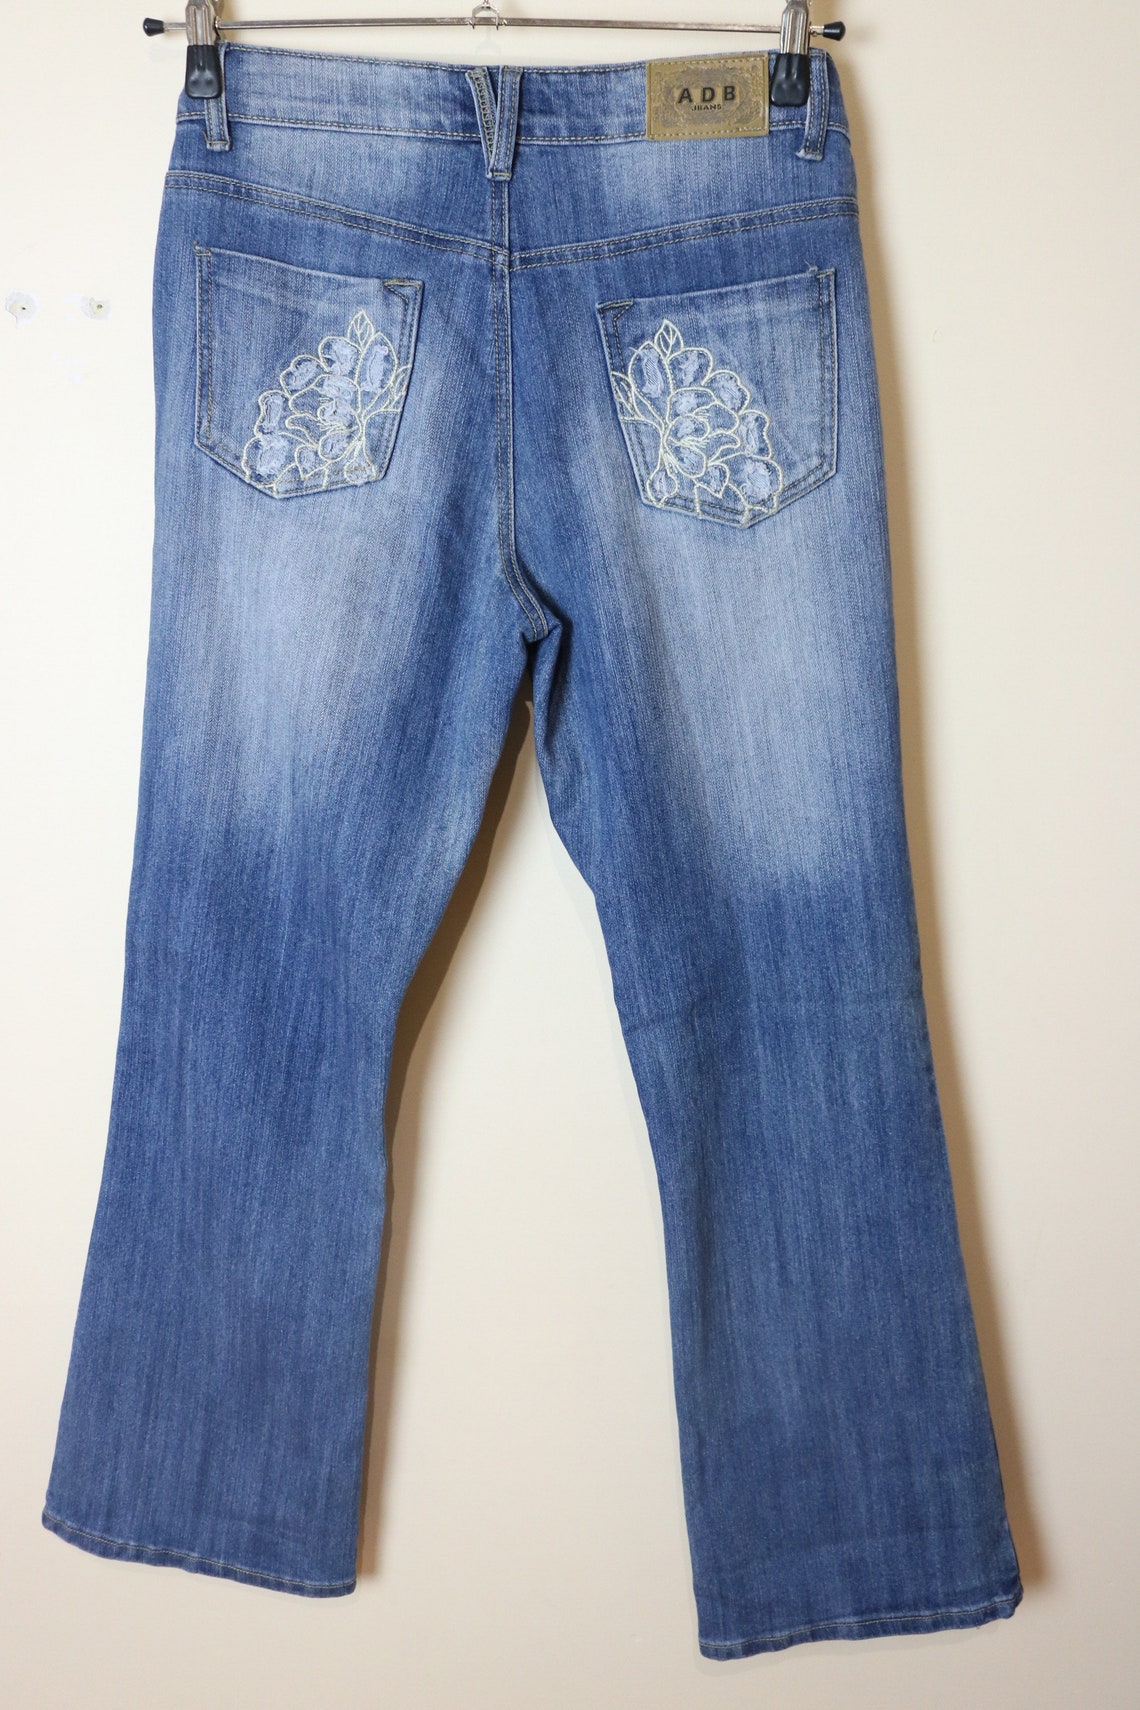 ADB design blue original vintage jeans rare nice fashion | Etsy